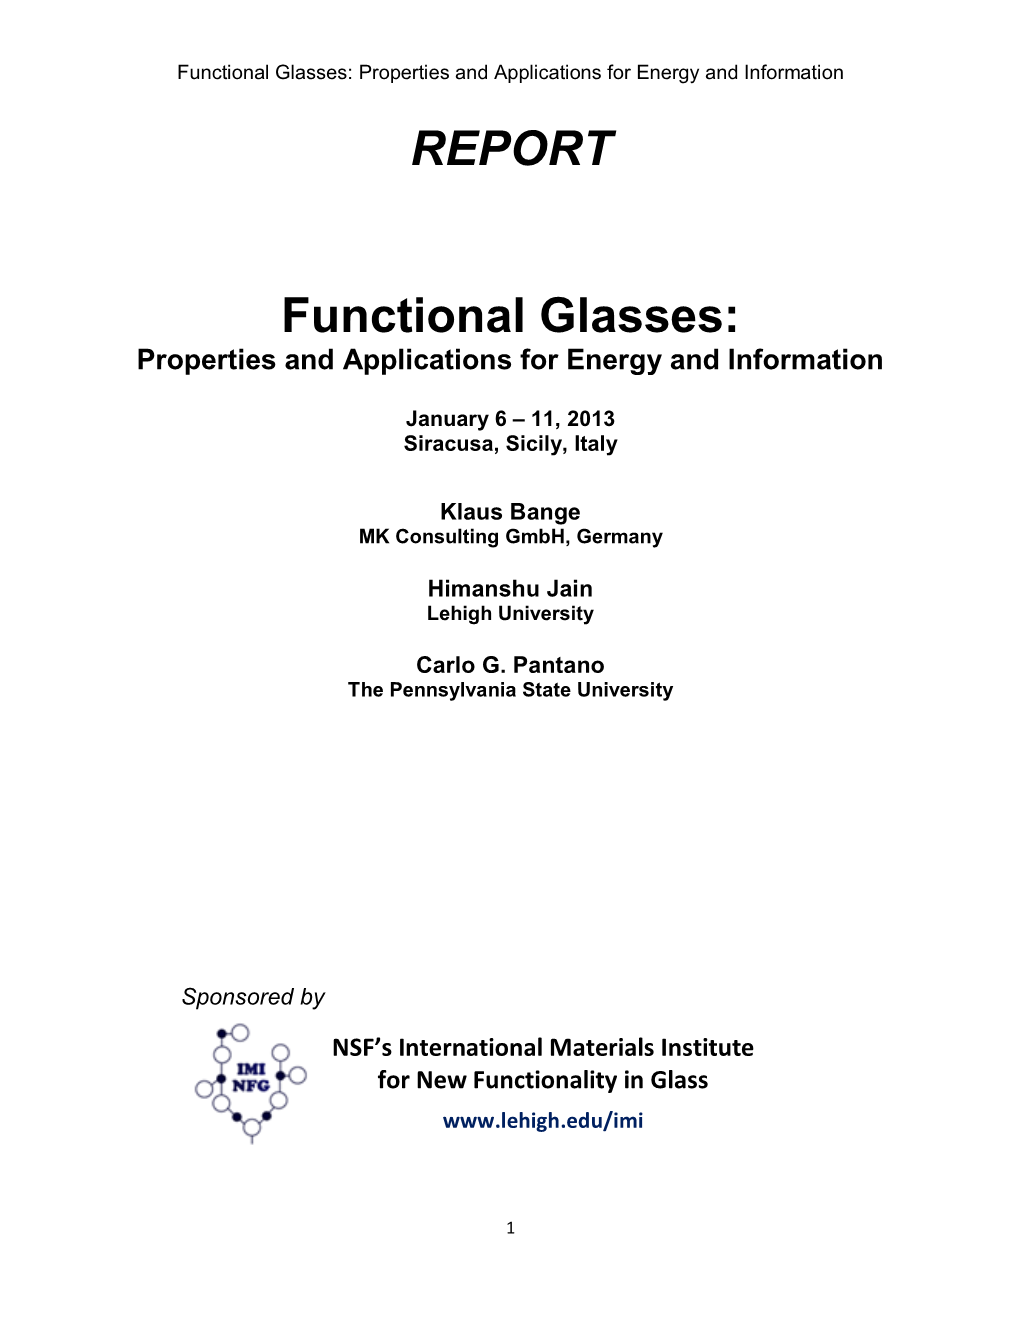 REPORT Functional Glasses